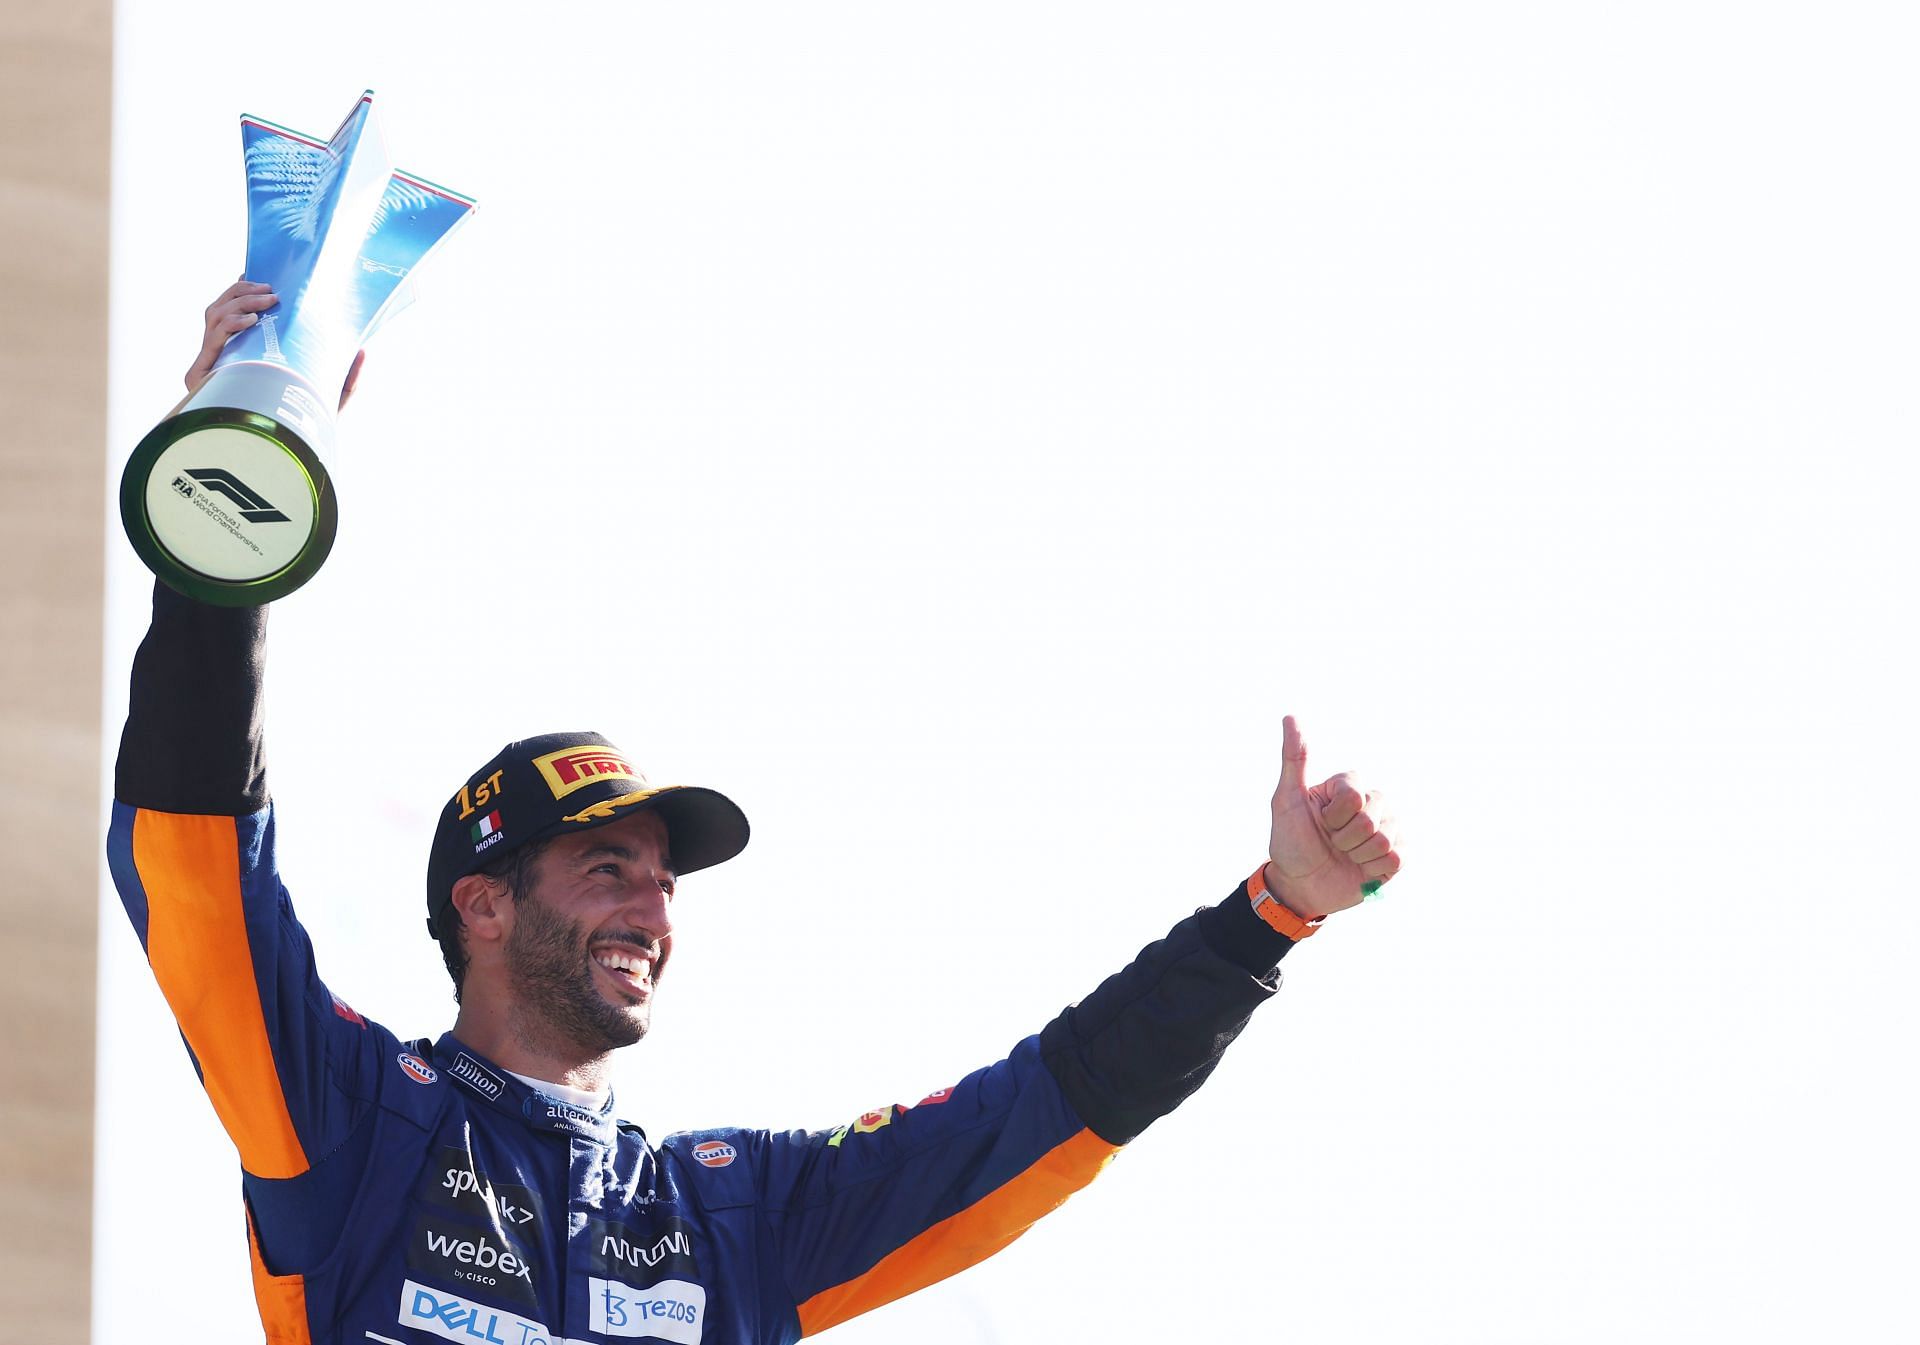 F1 Grand Prix of Italy - Daniel Ricciardo wins an eventful race